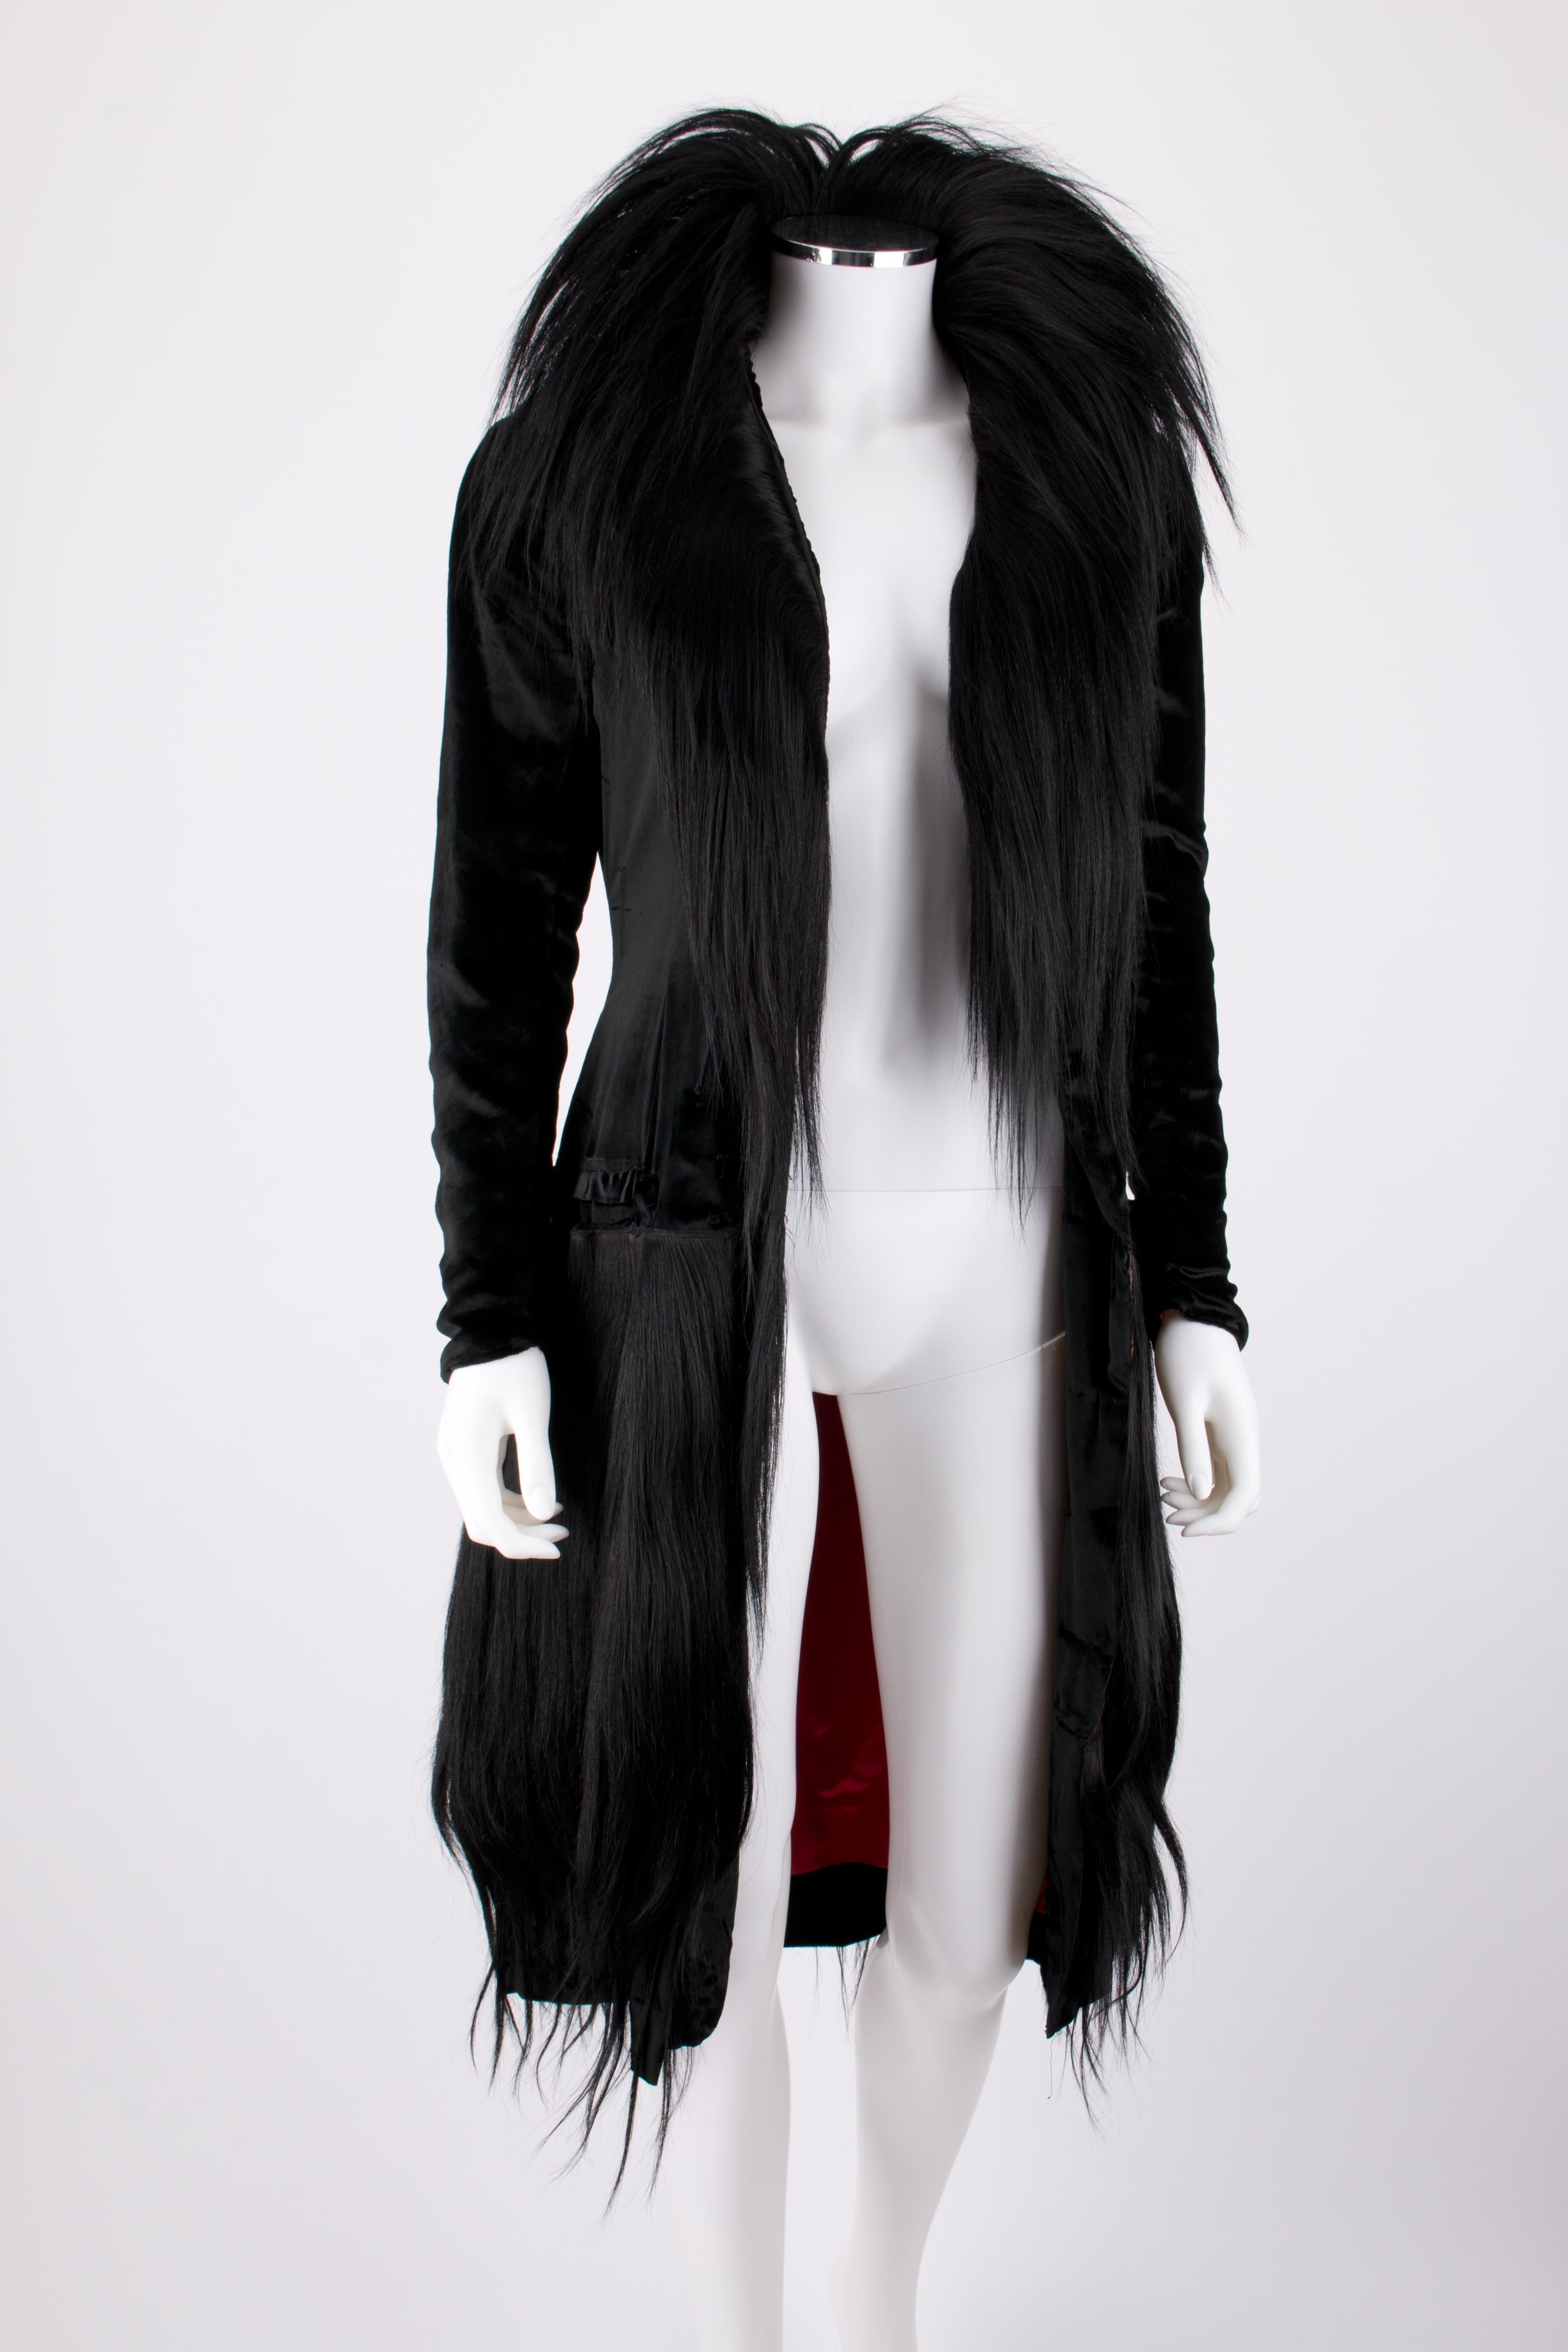 COUTURE c.1920's Black Long Fur Silk Velvet Avant Garde Flapper Coat OOAK

Circa: 1920’s
Style: Coat 
Color(s): Black (exterior); red (interior)
Lined: Yes
Unmarked Fabric Content (feel of): Genuine fur (trim/detail), velvet (exterior); satin